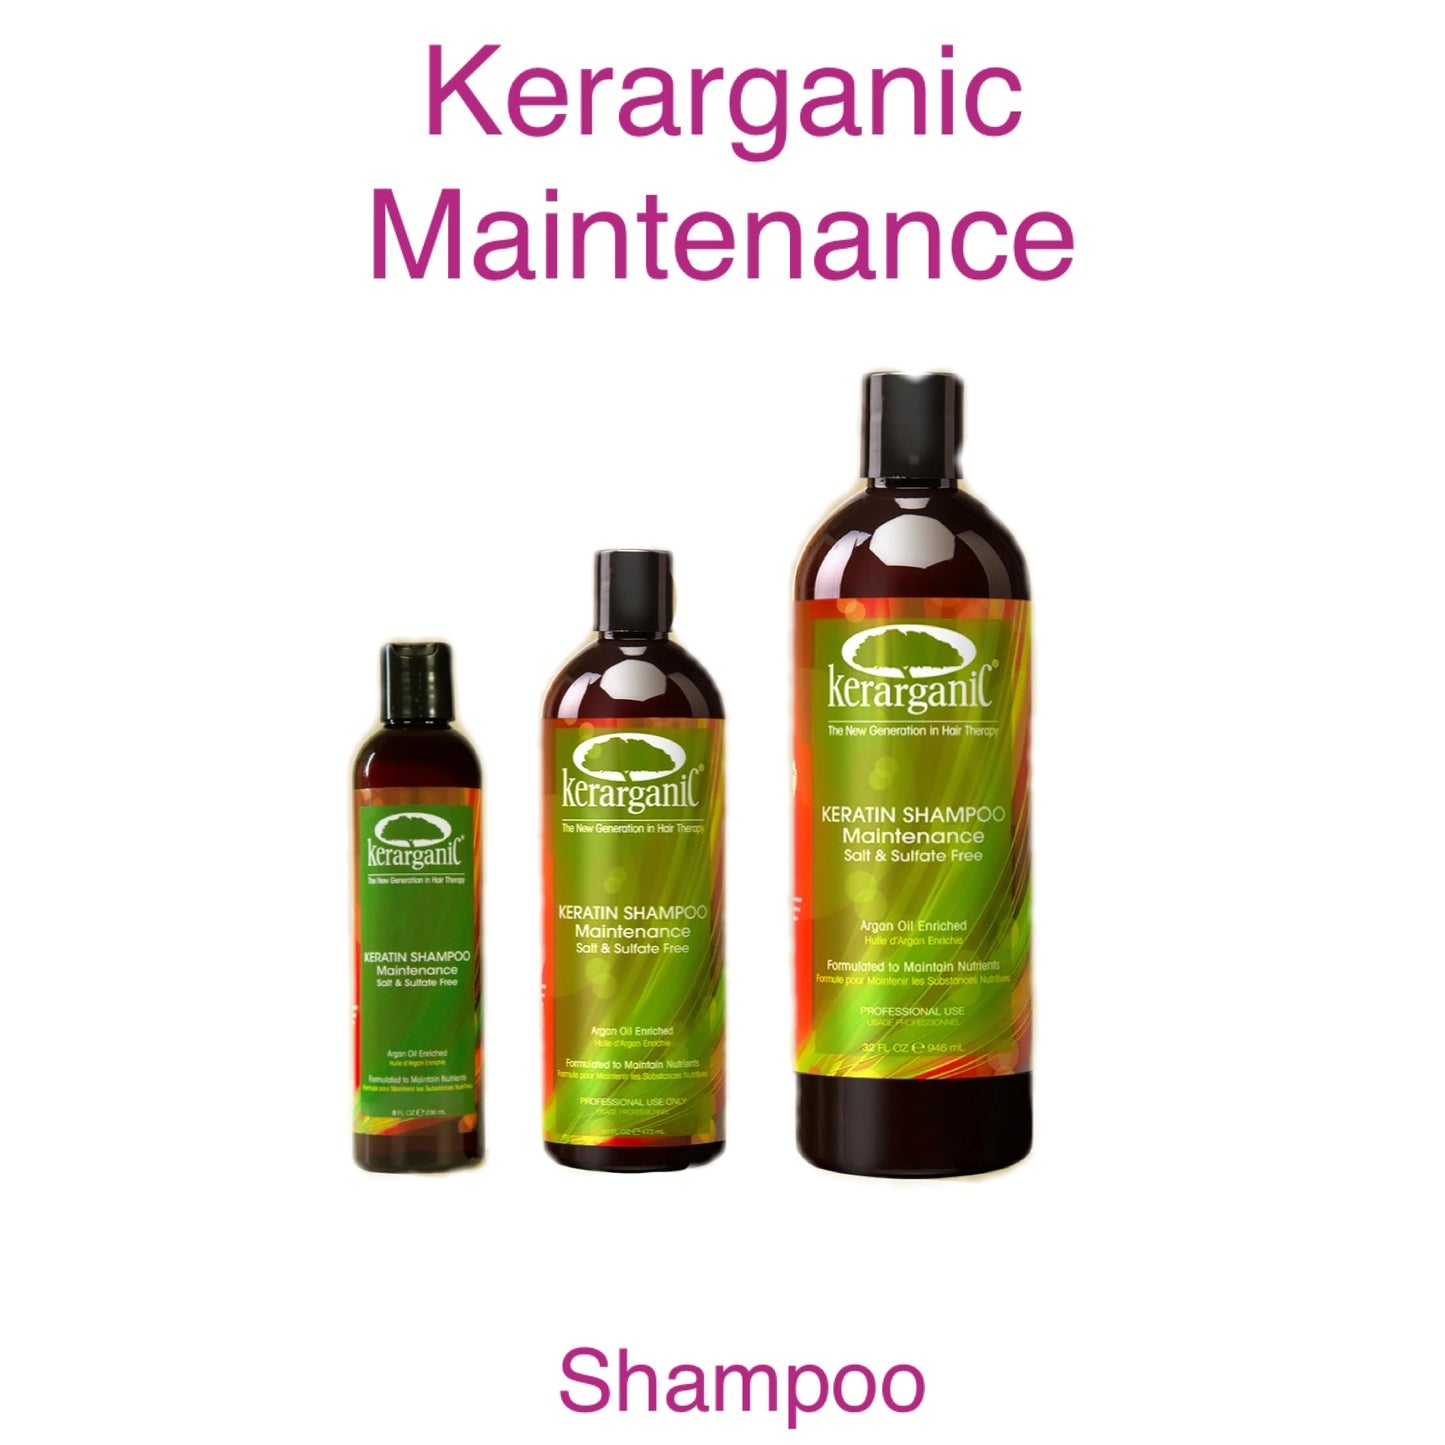 Kerarganic Post Maintenance Shampoo 236ml to 946ml